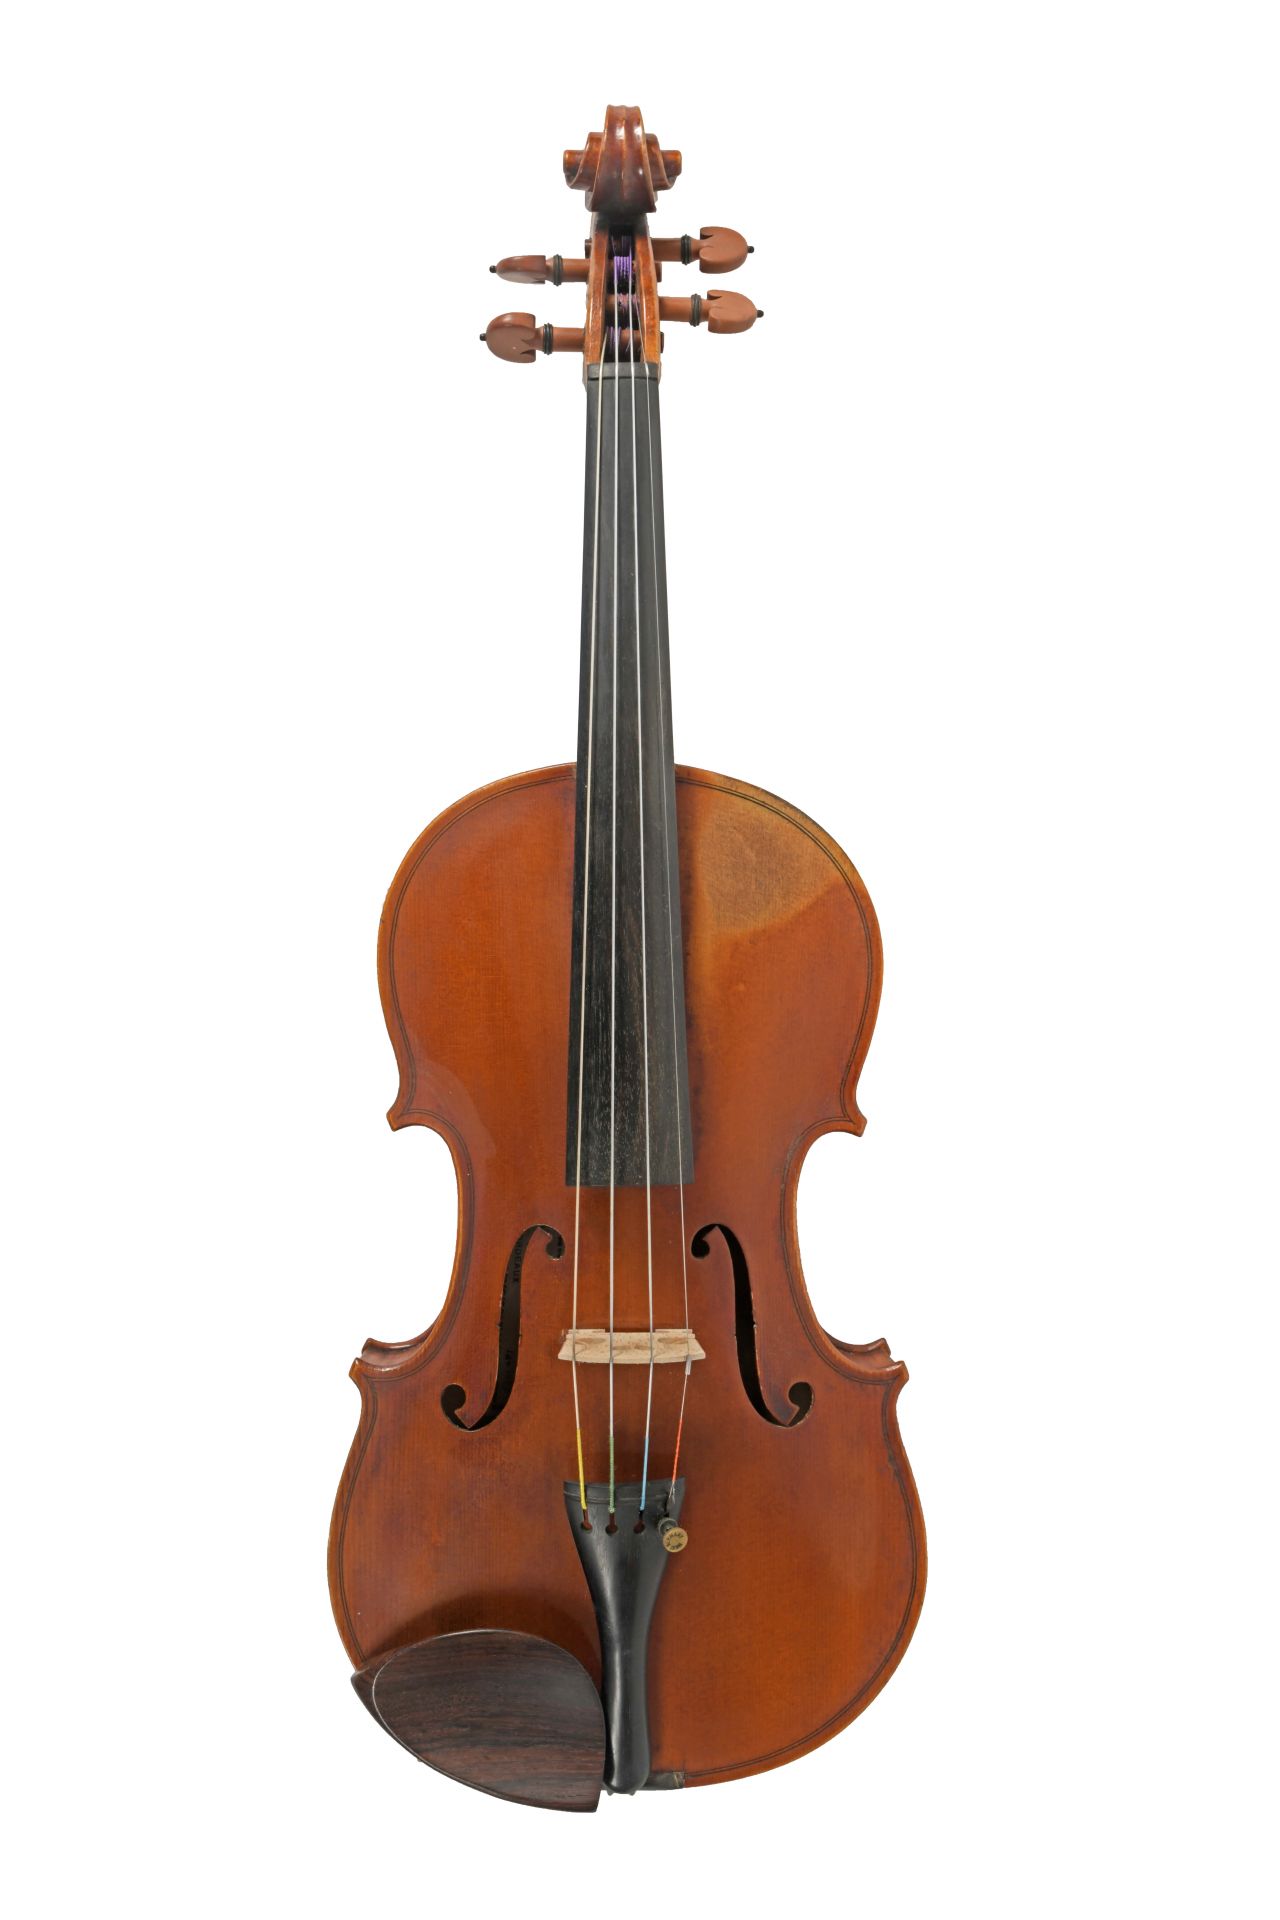 Amati Mangenot violin